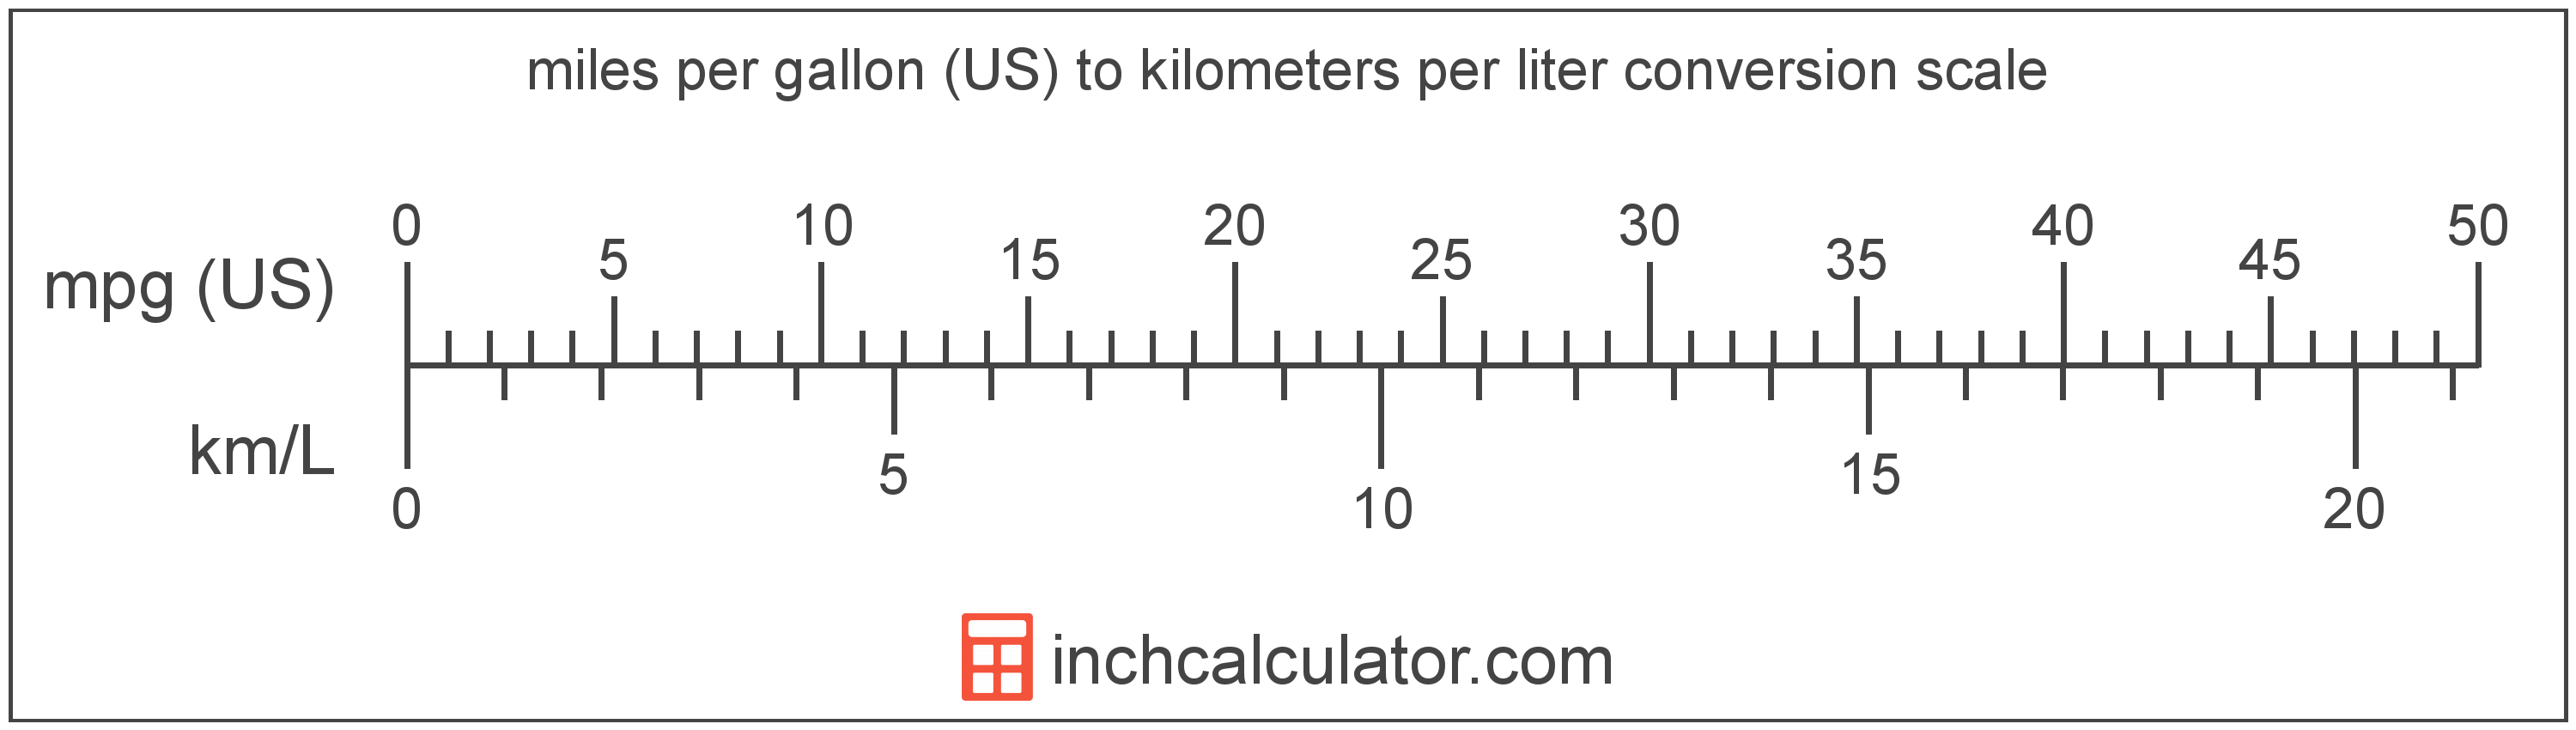 conversion scale showing kilometers per liter and equivalent miles per gallon (US) fuel economy values